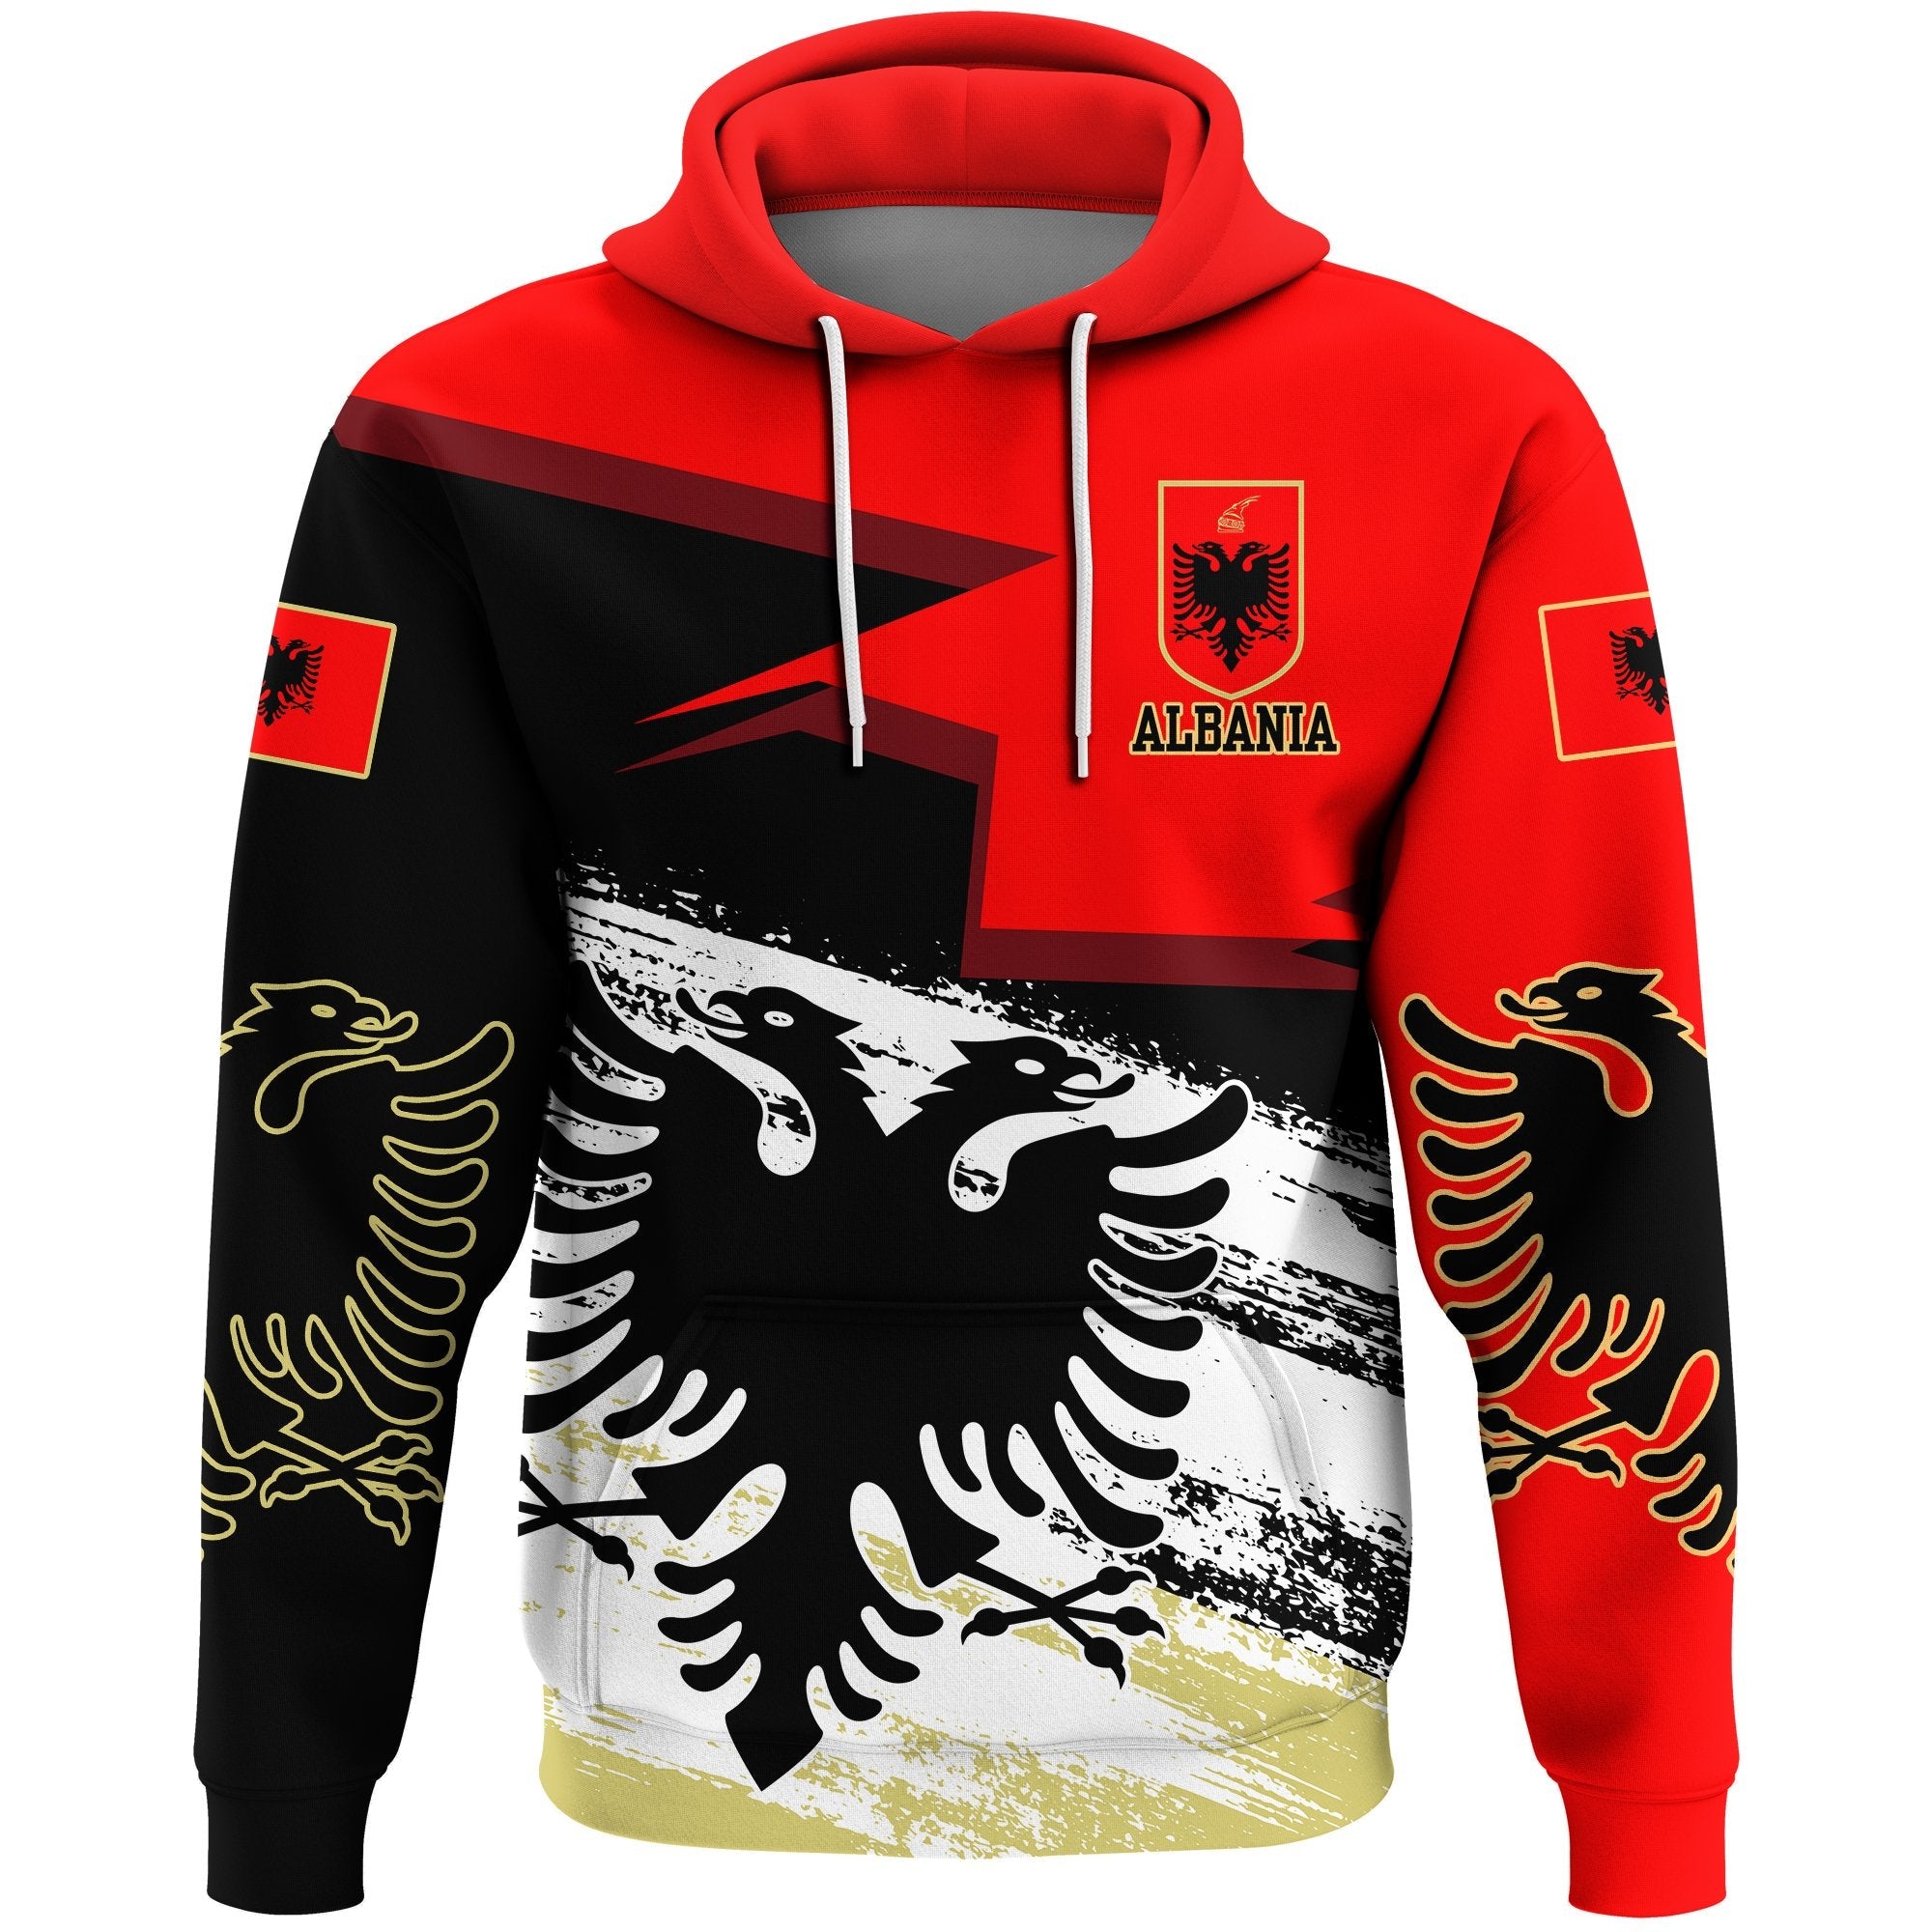 albania-hoodie-albania-black-double-headed-eagle-flag-new-collection